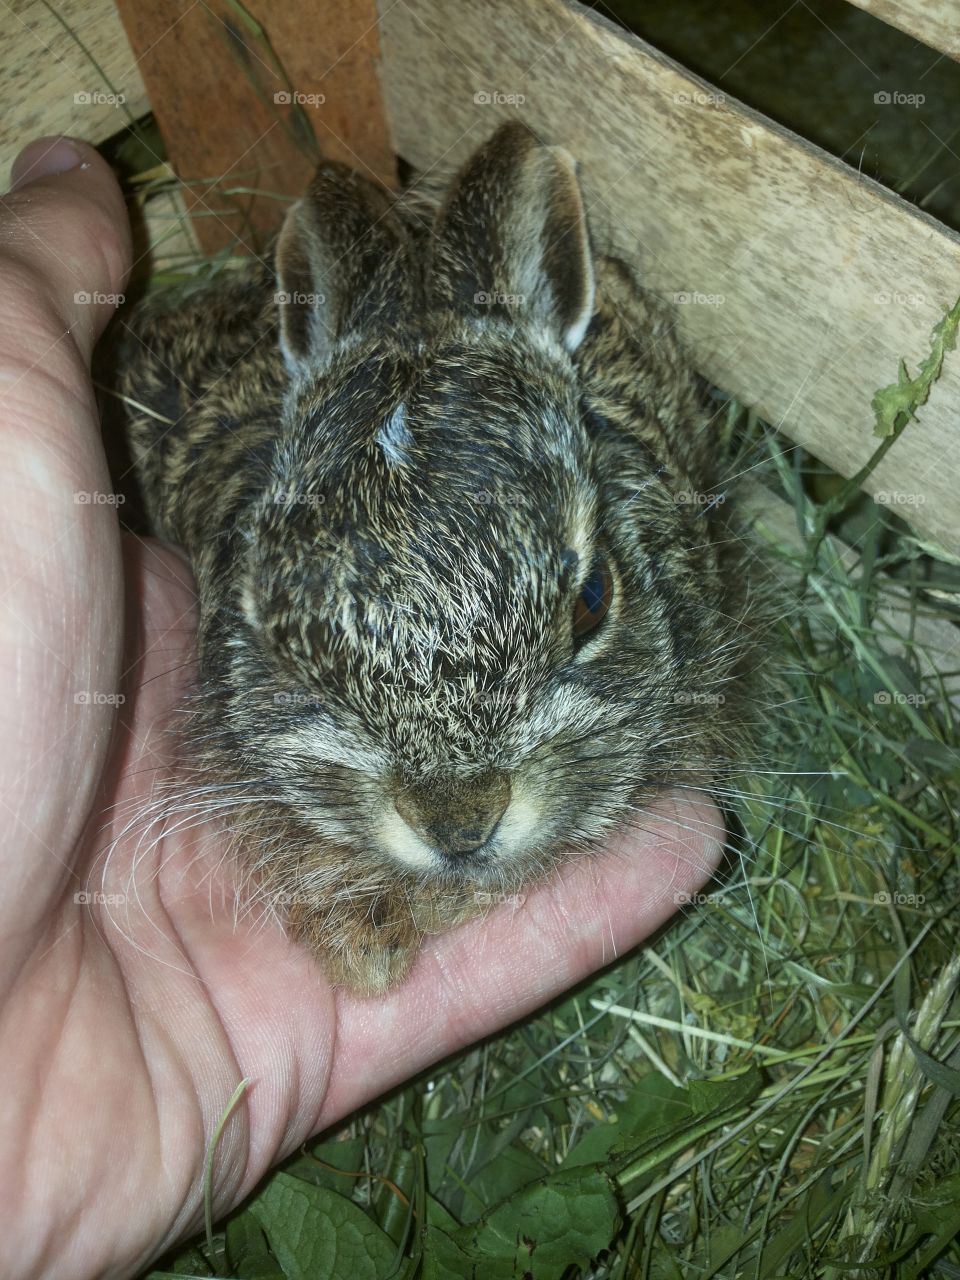 Rabbit. I save wild rabbit and love her